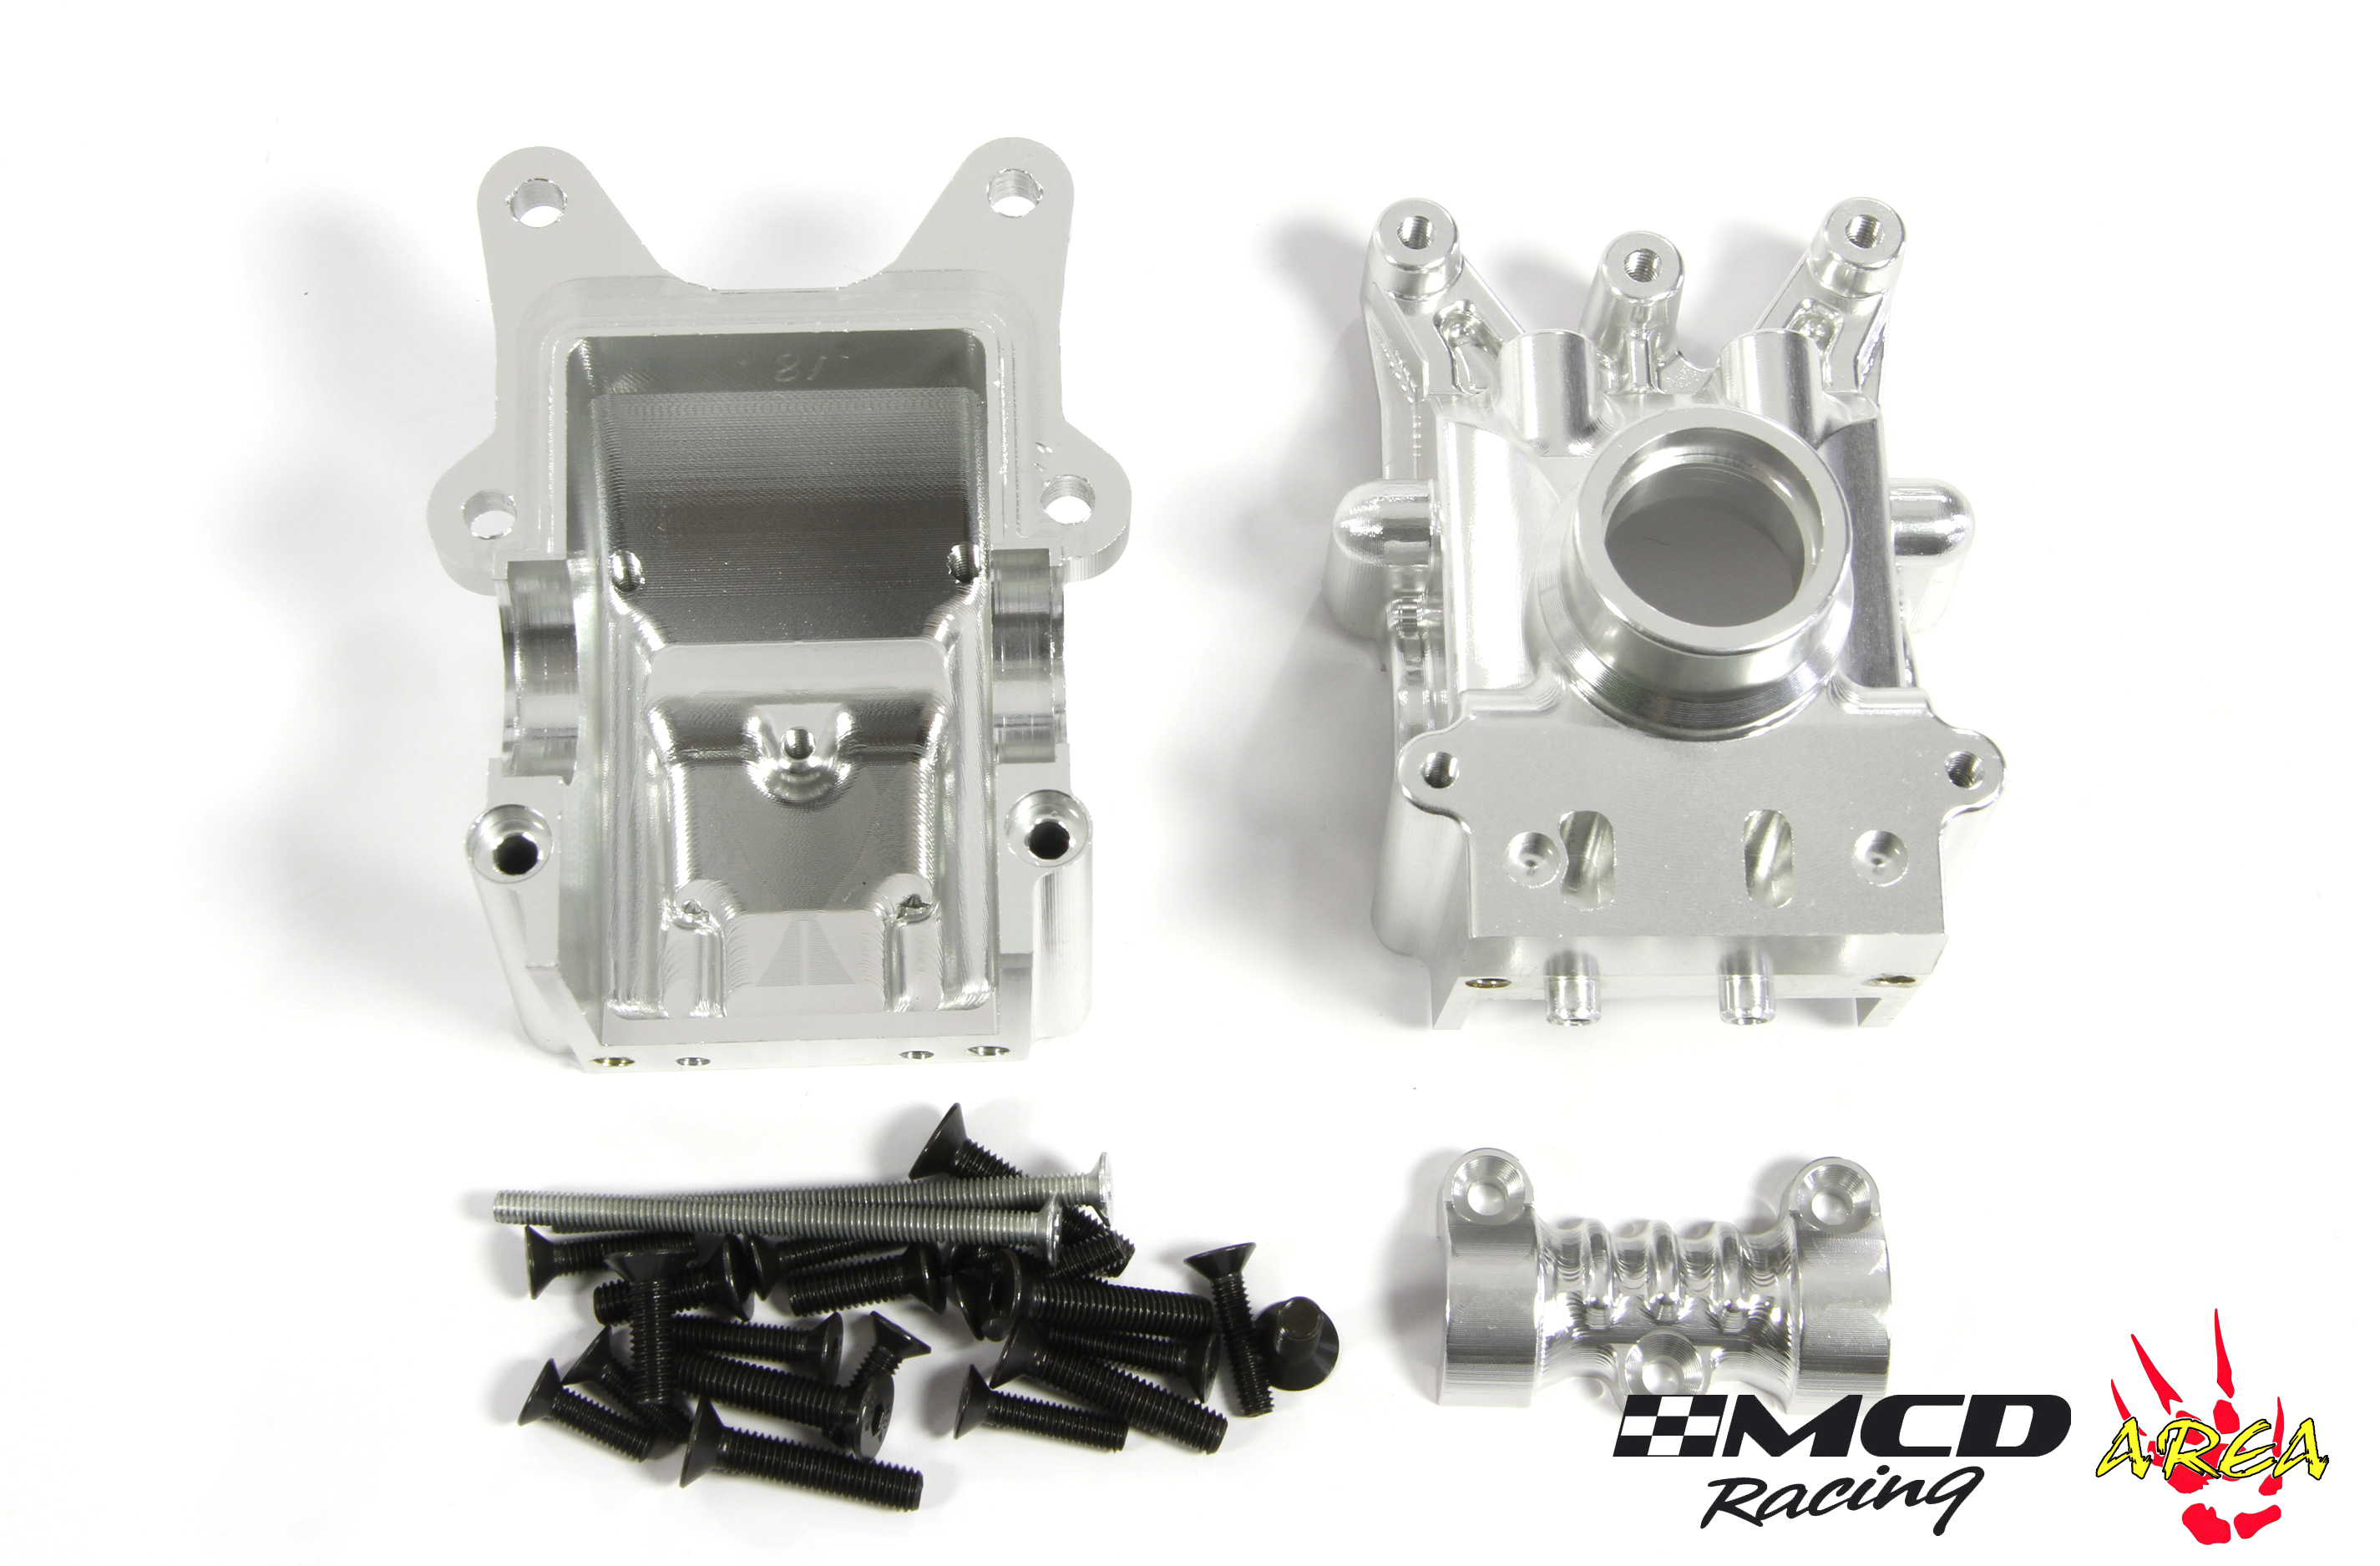 AREA-MCD-007 Aluminum transmission case for MCD RR5/XS5